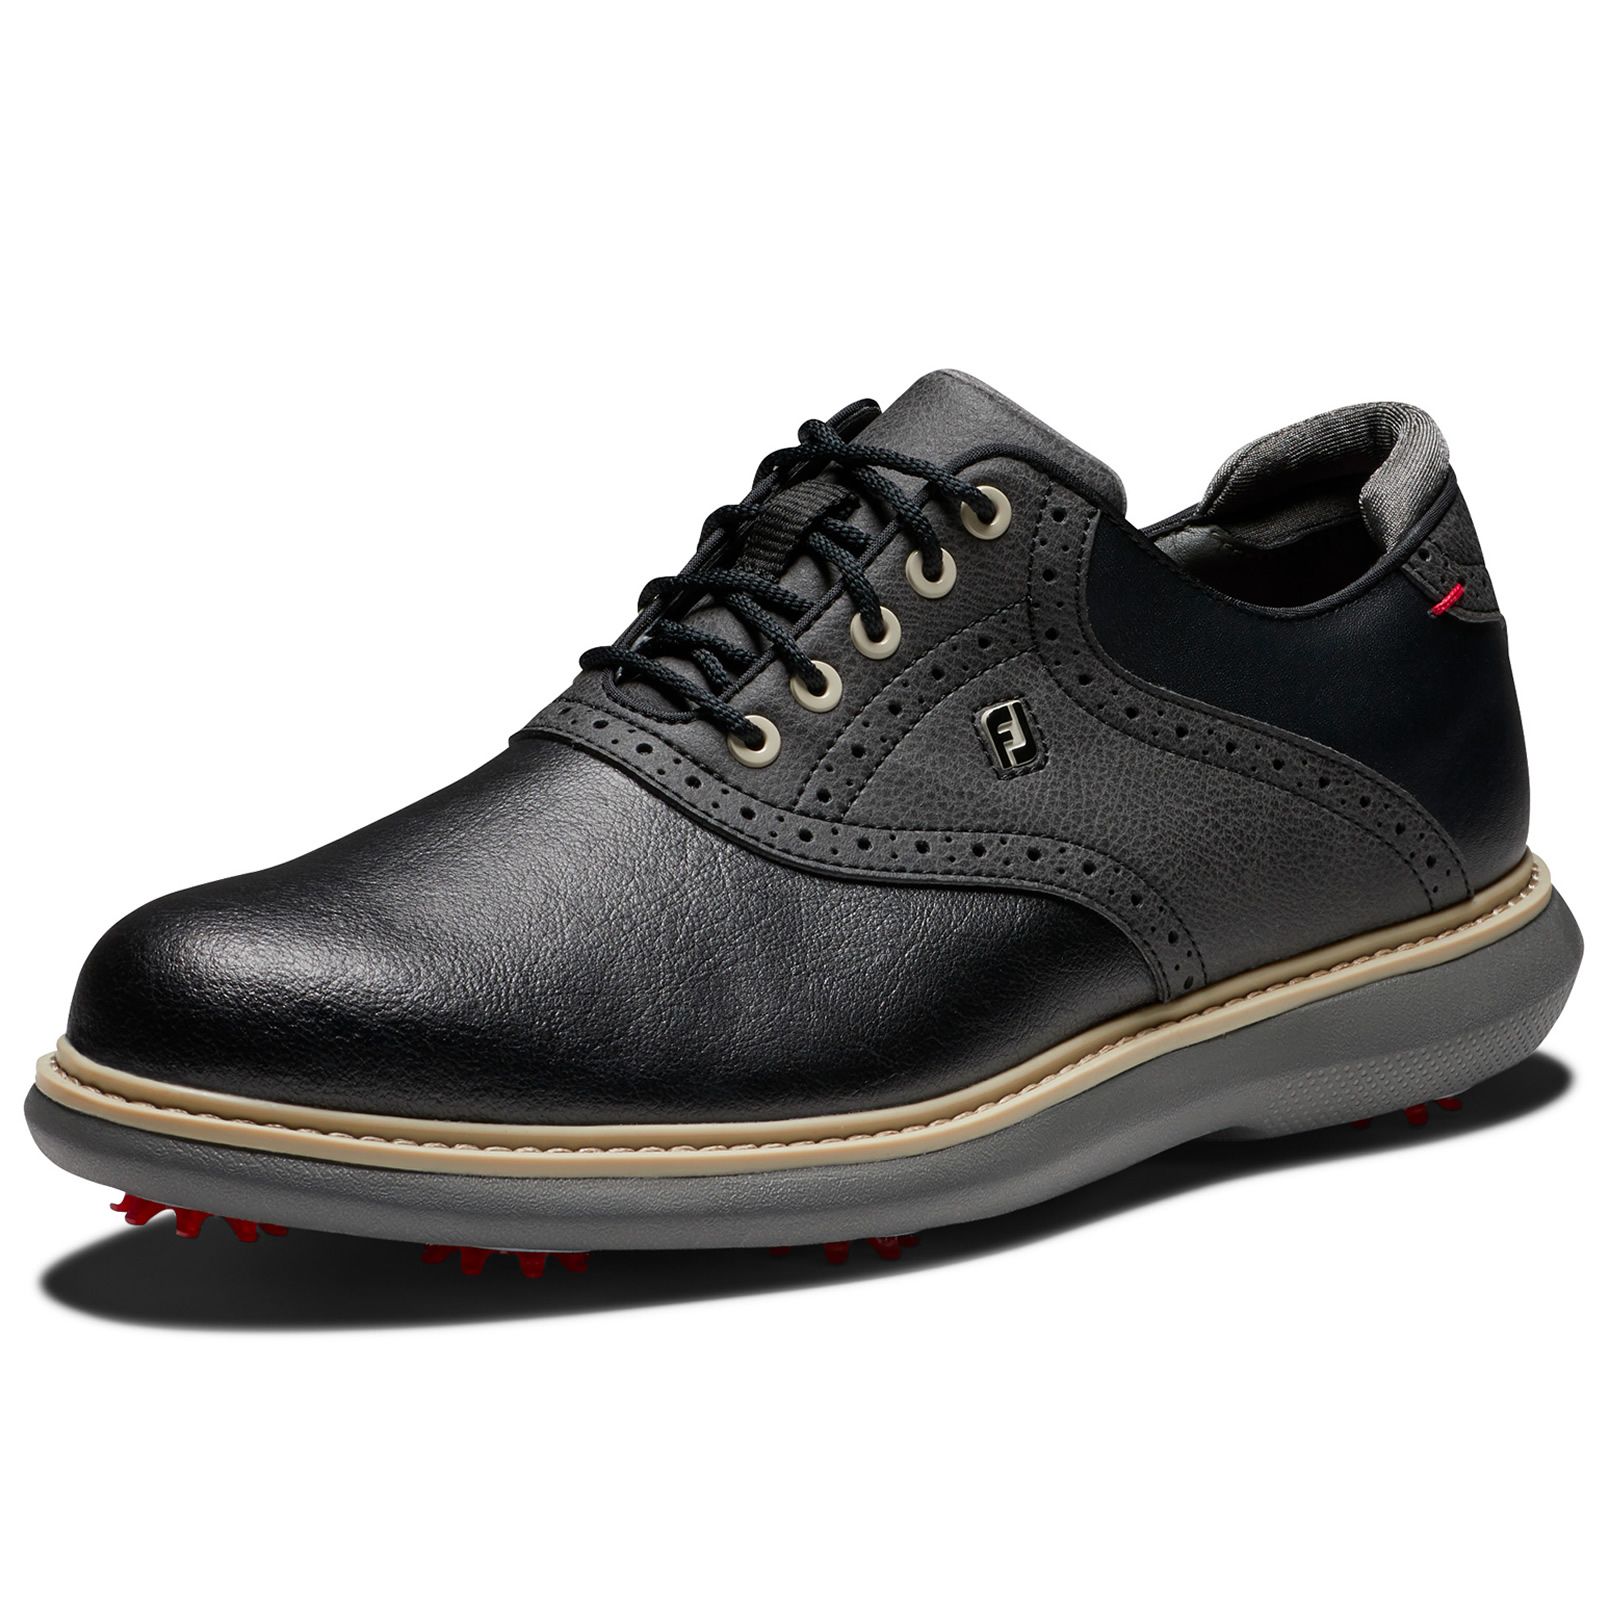 FootJoy Traditions Golf Shoes #57904 Black/Black | Scottsdale Golf